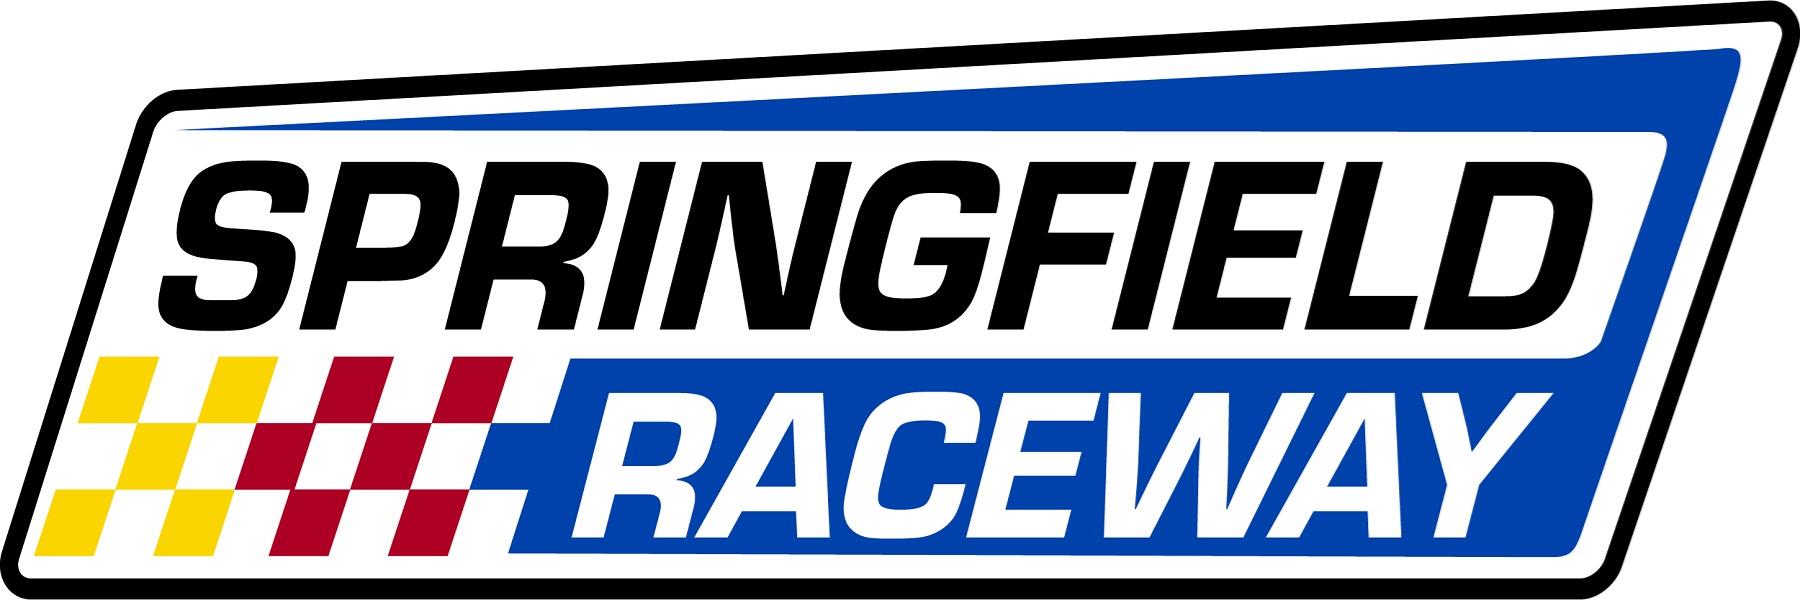 5/14/2022 - Springfield Raceway